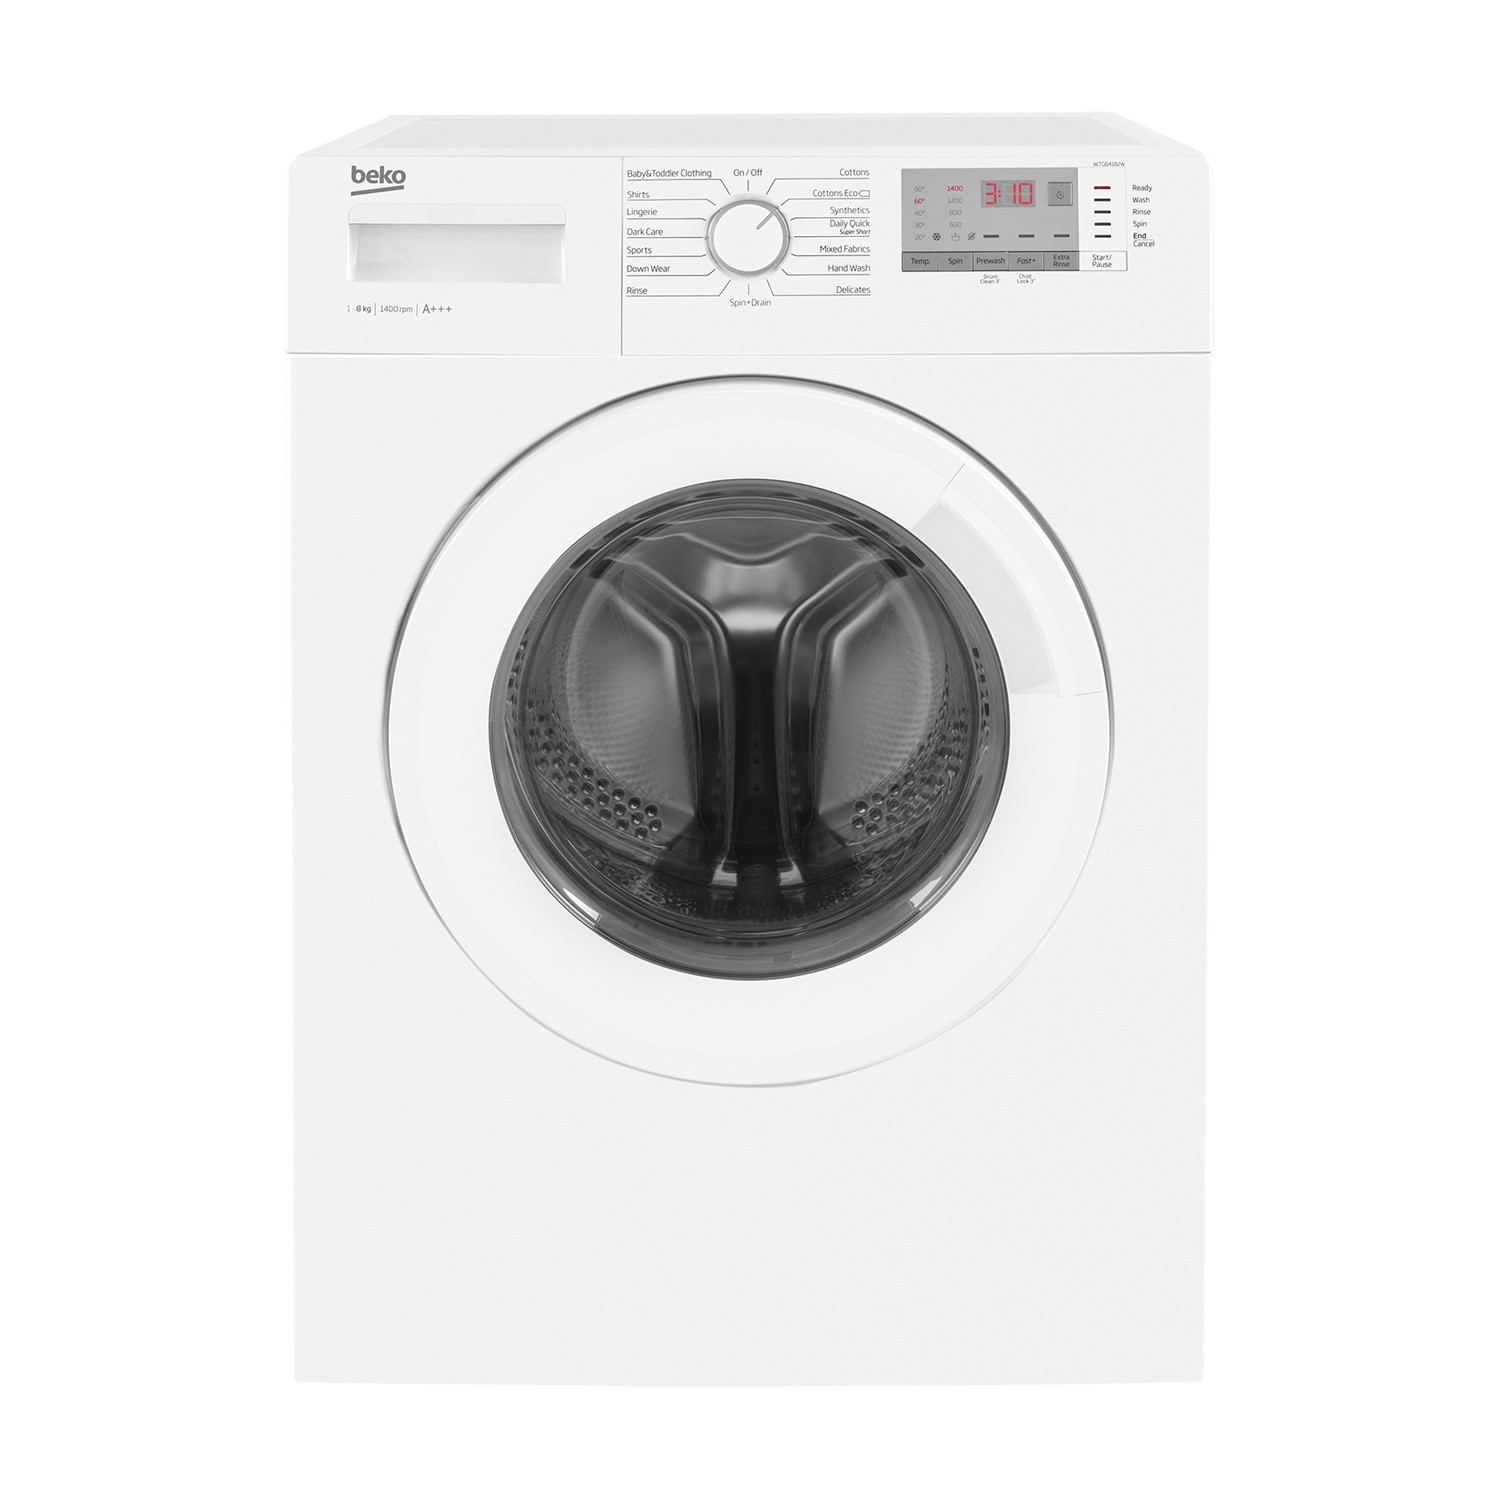 Beko WTG841B2W 8Kg Washing Machine with 1400 rpm - White - A+++ Rated